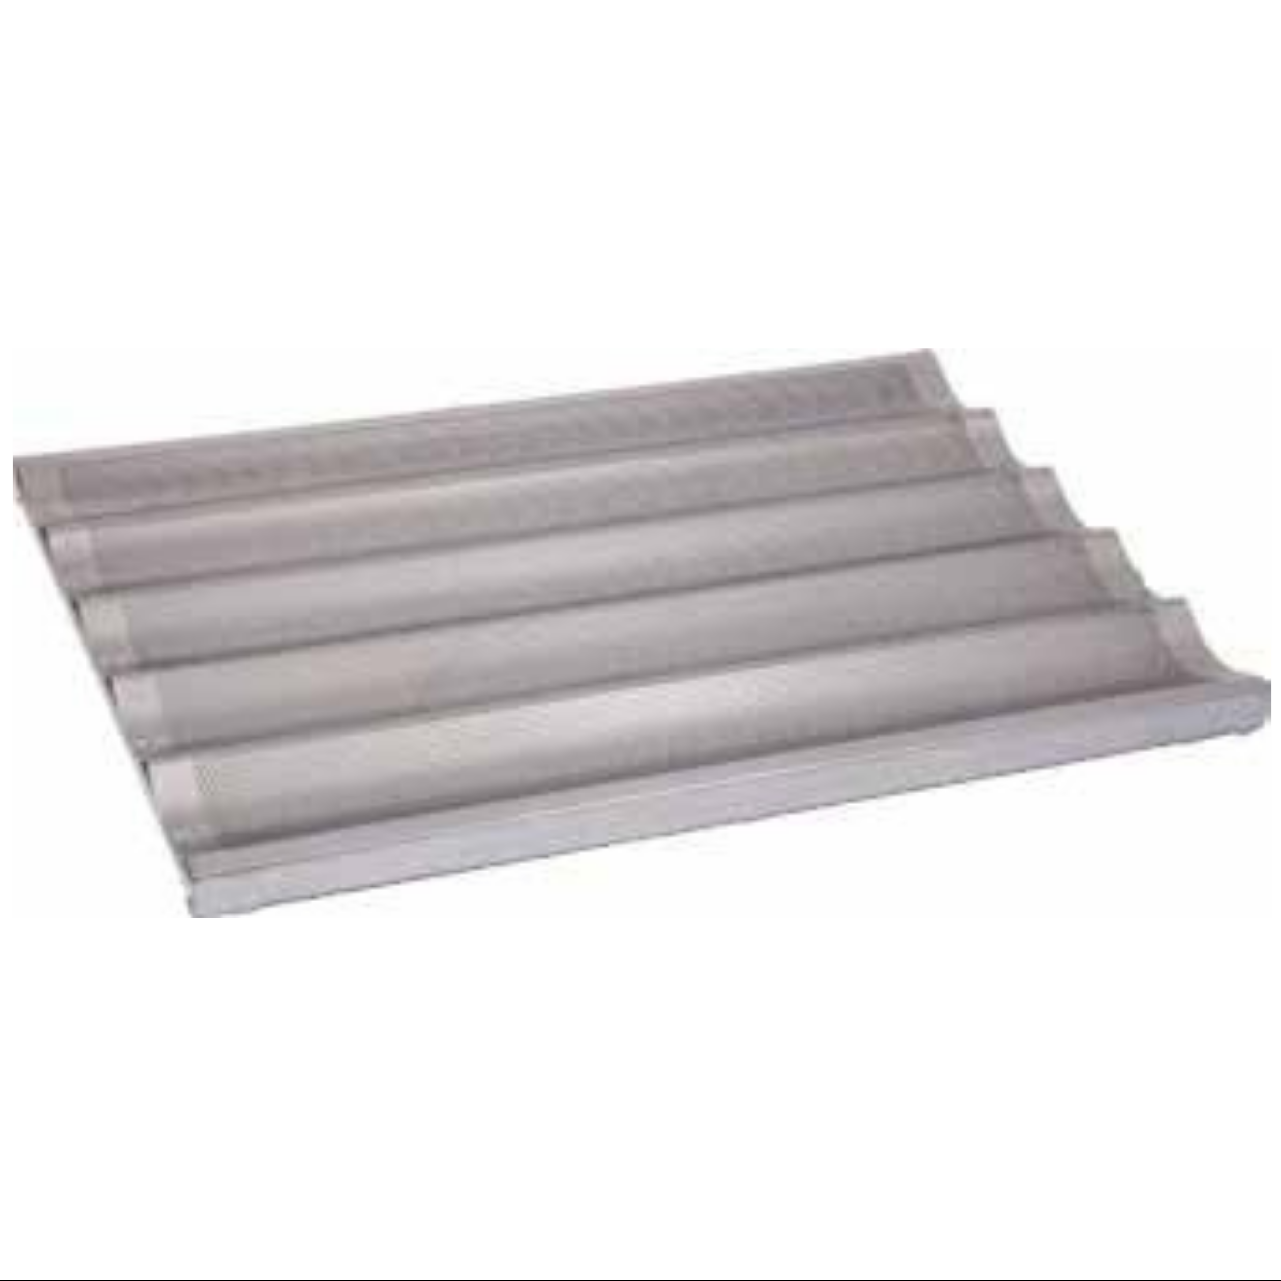 Aluminum baguette tray- 5 spaces, 60cmx 80cm